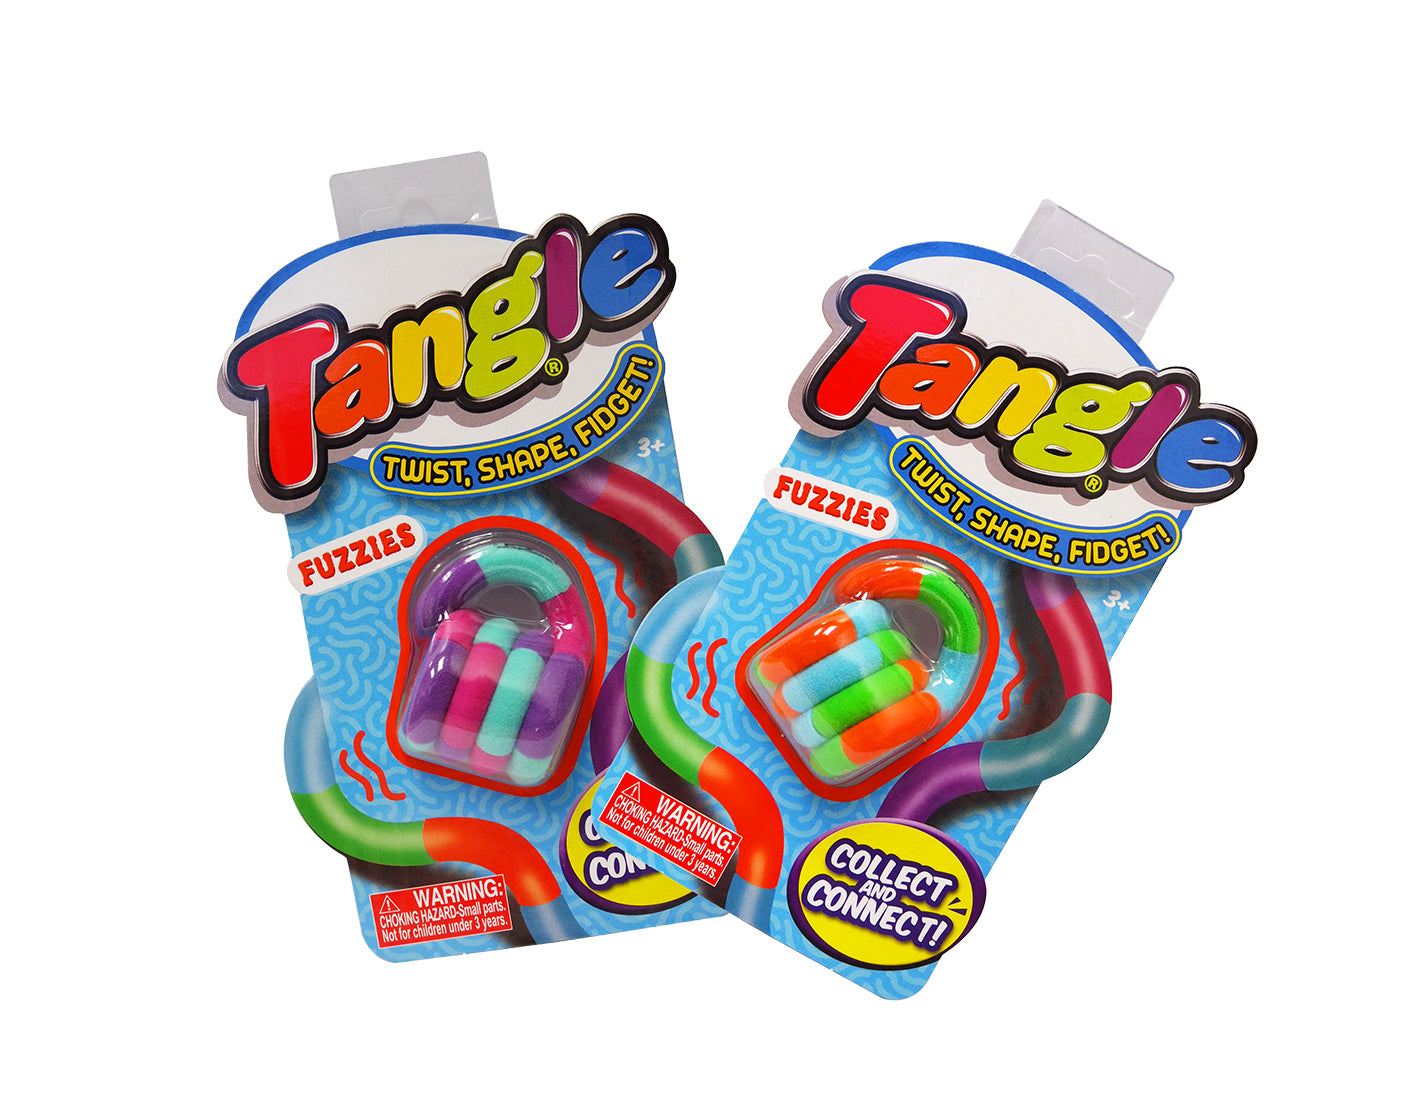 TANGLE_Fuzzies_in_packaging